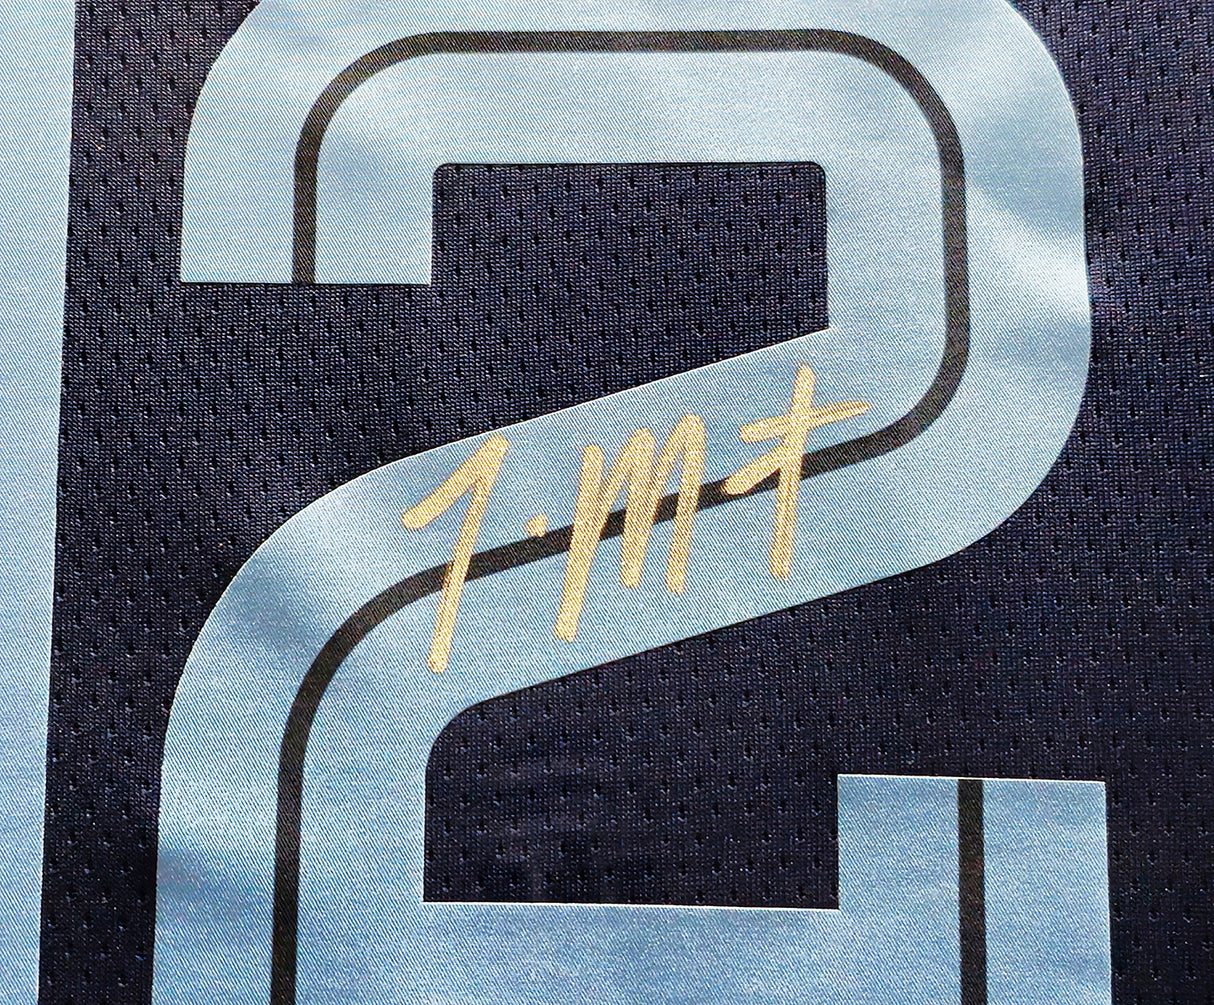 Memphis Grizzlies Ja Morant Autographed Framed Blue Nike Swingman Jersey Beckett BAS QR Stock #212661